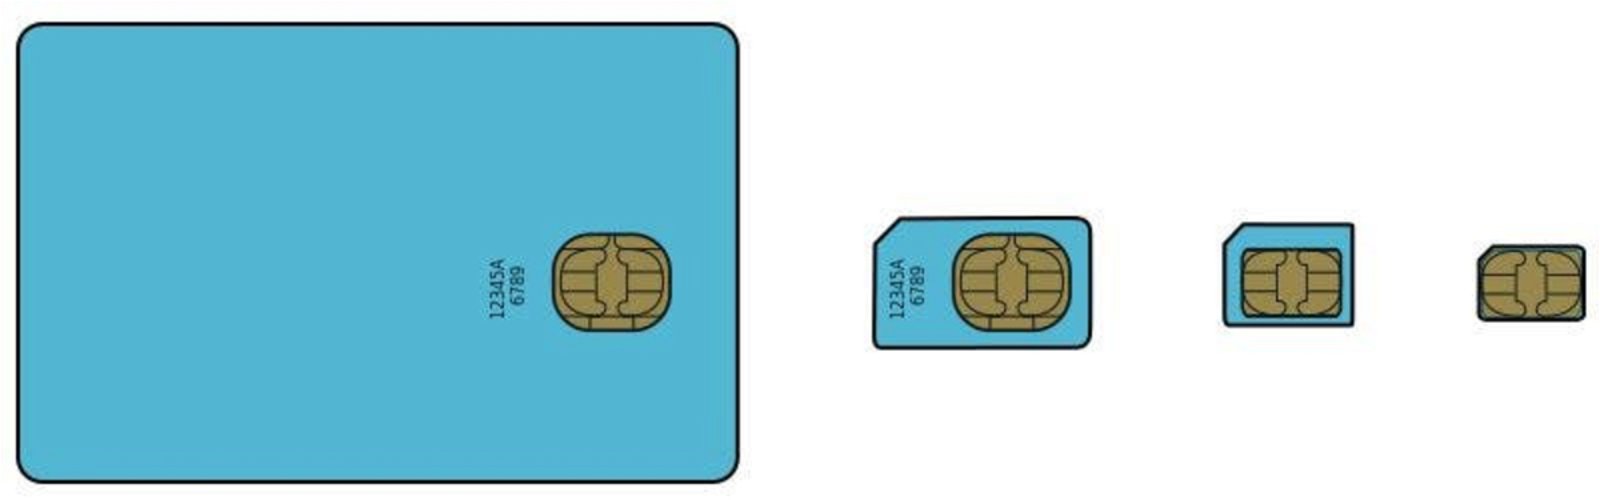 GSM-SIM-card-evolution